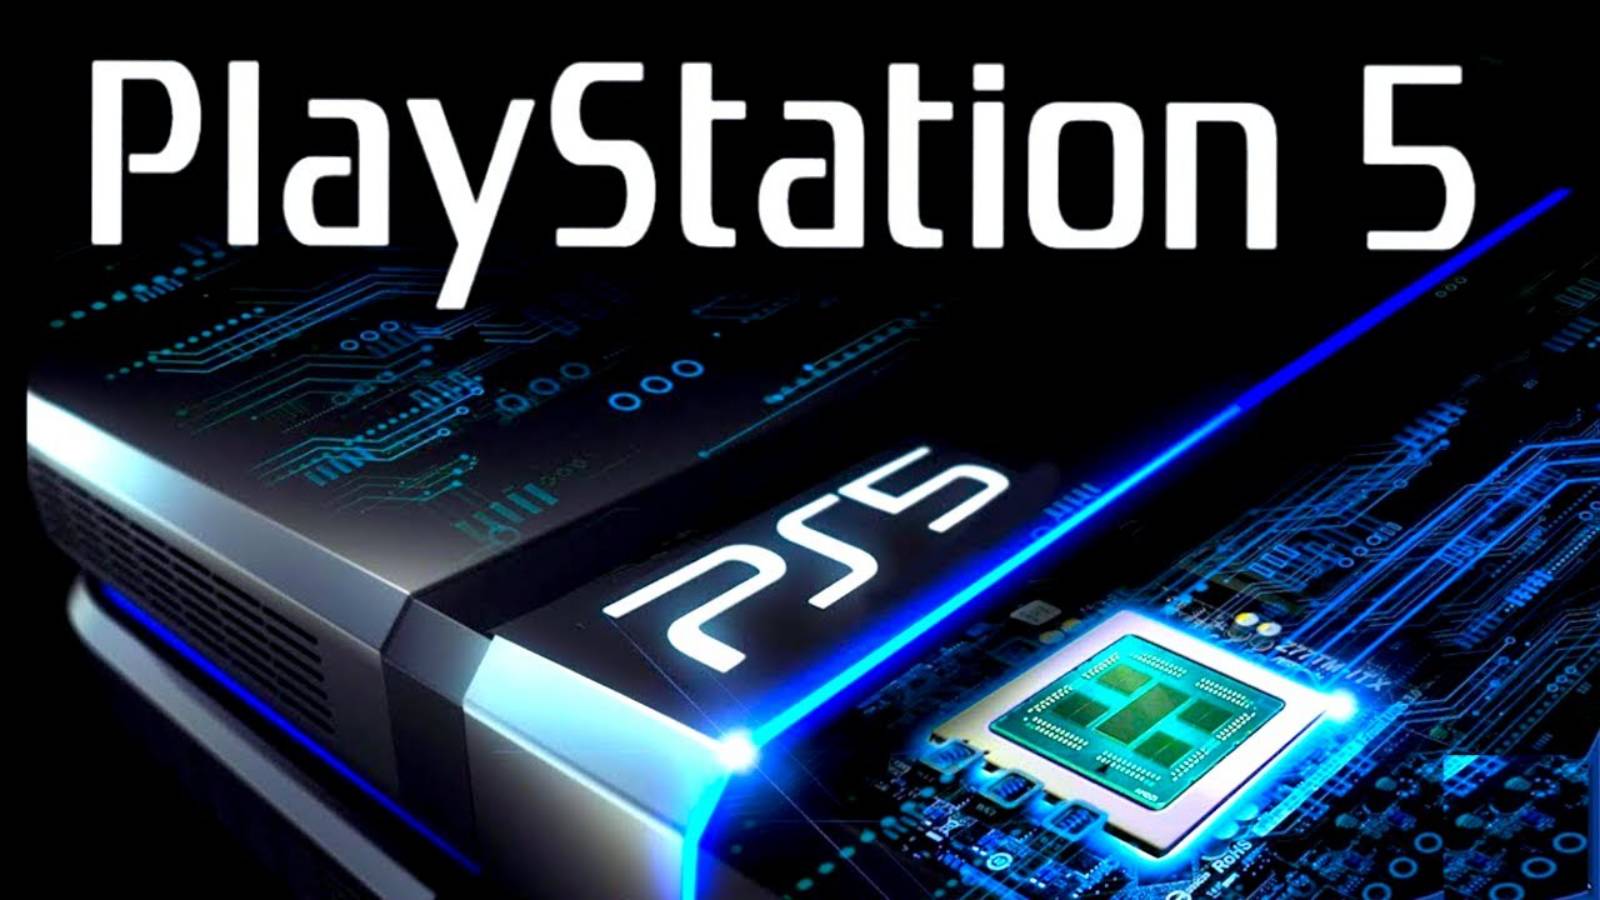 Playstation 5 sony udgivelse